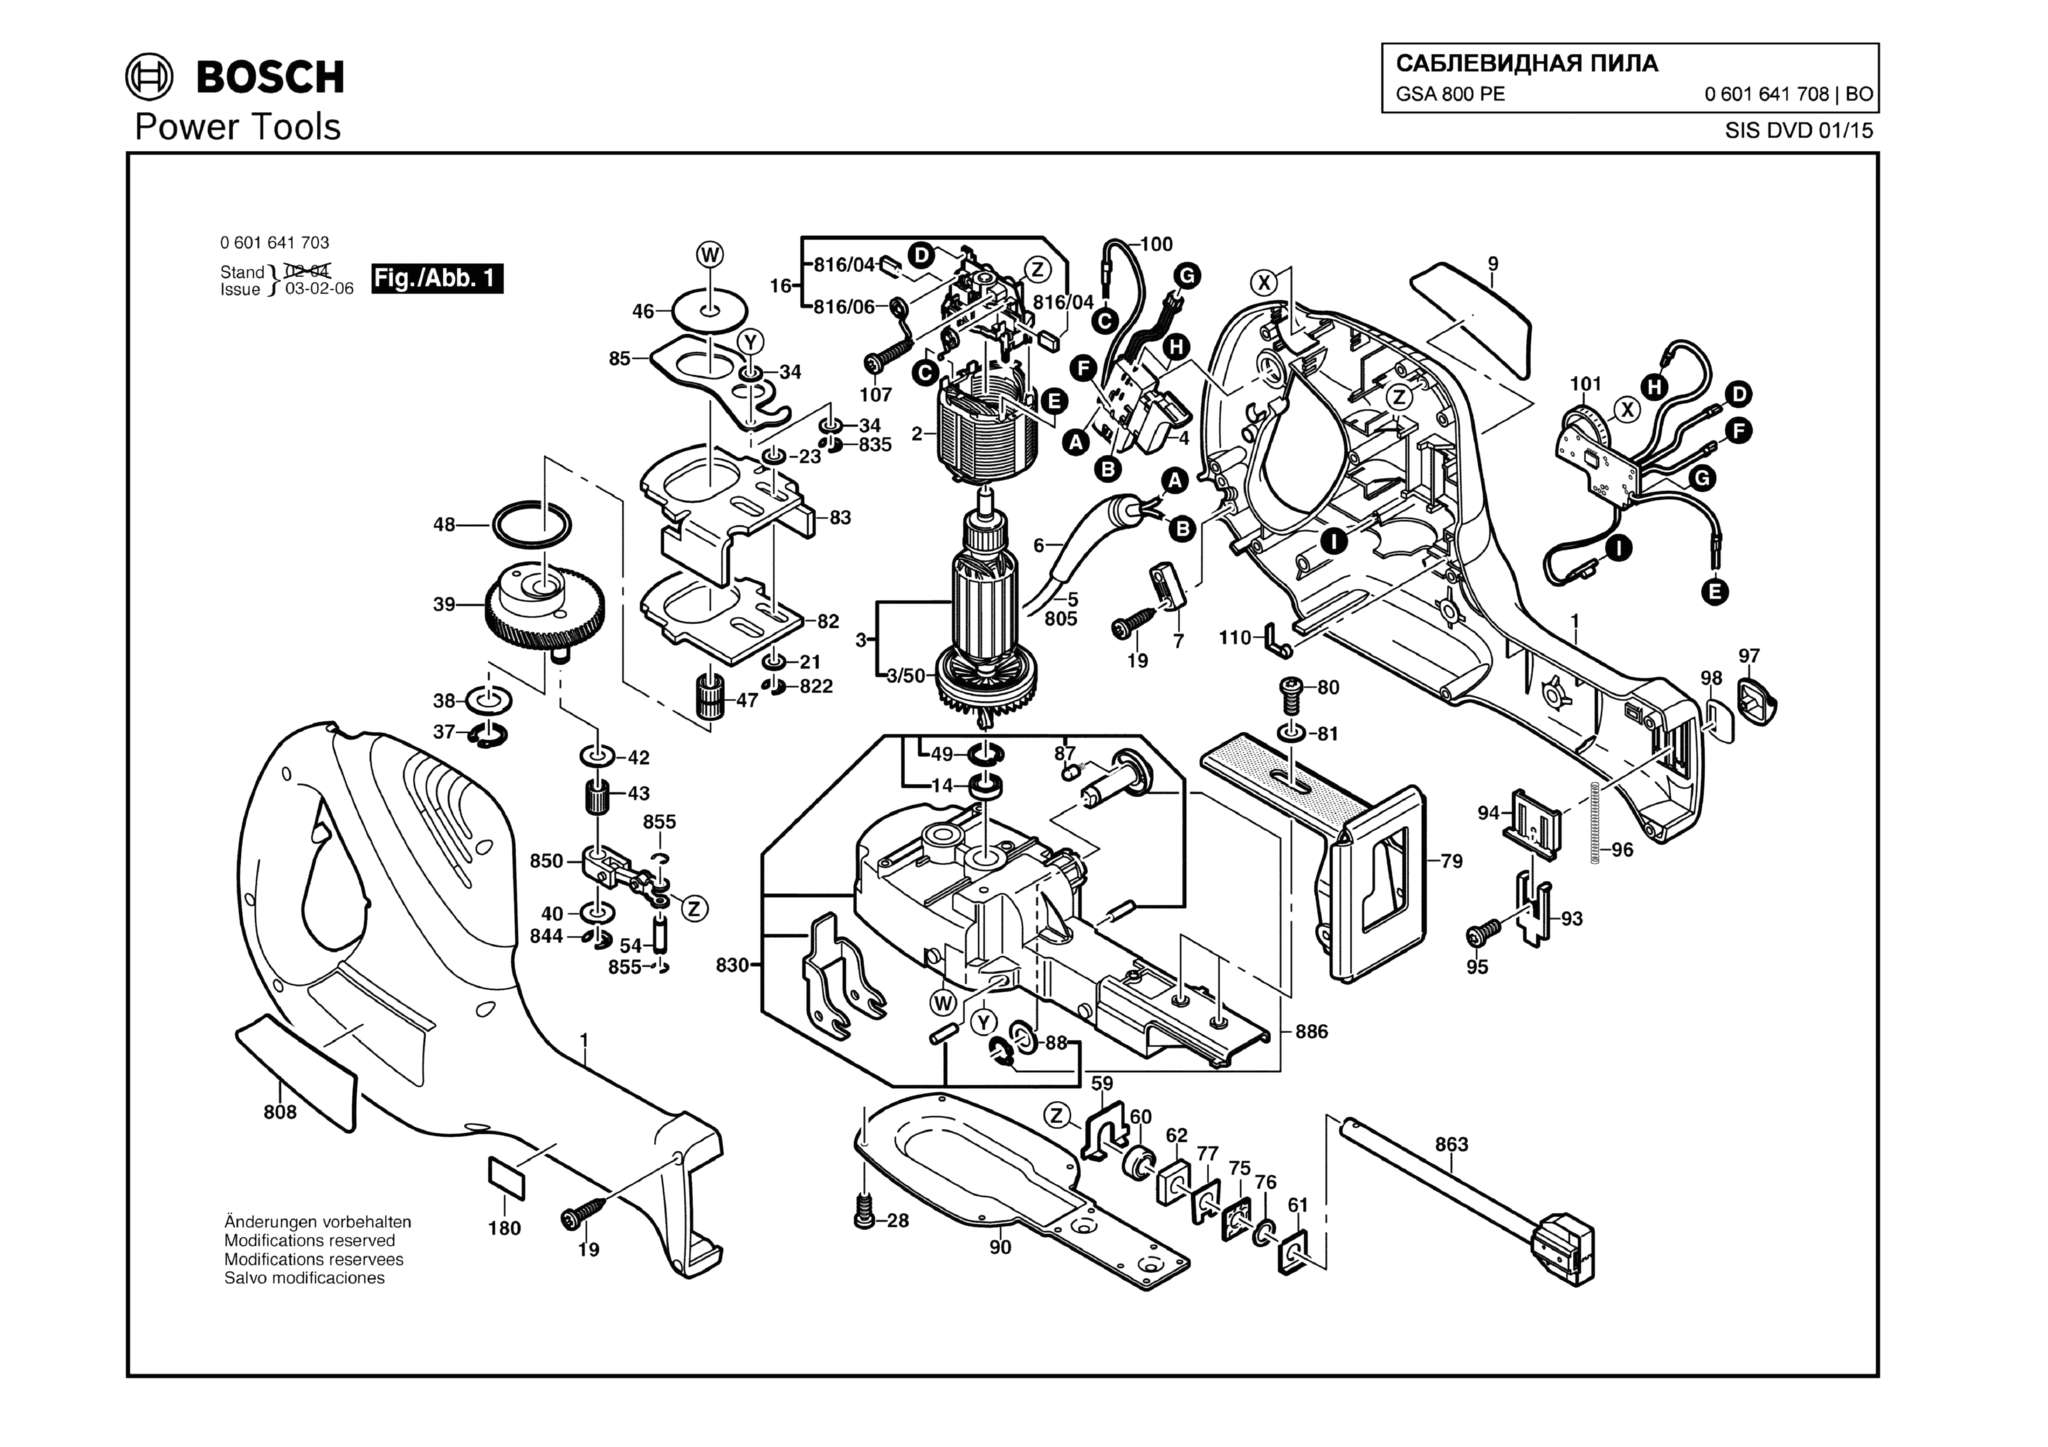 Запчасти, схема и деталировка Bosch GSA 800 PE (ТИП 0601641708)